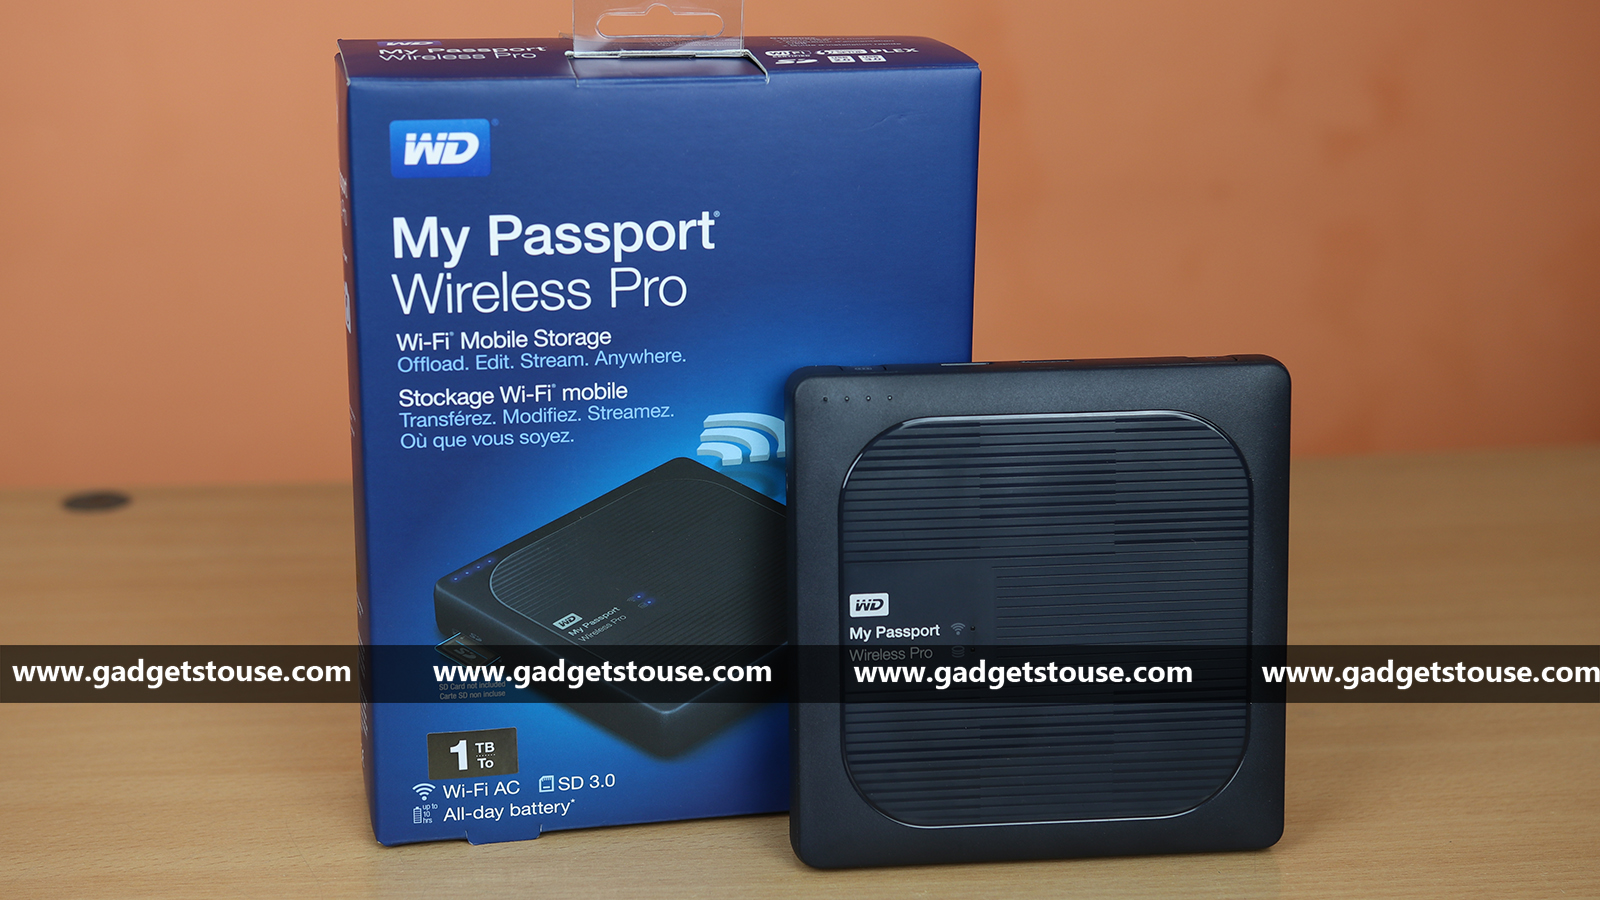 WD My Passport Wireless Pro Review